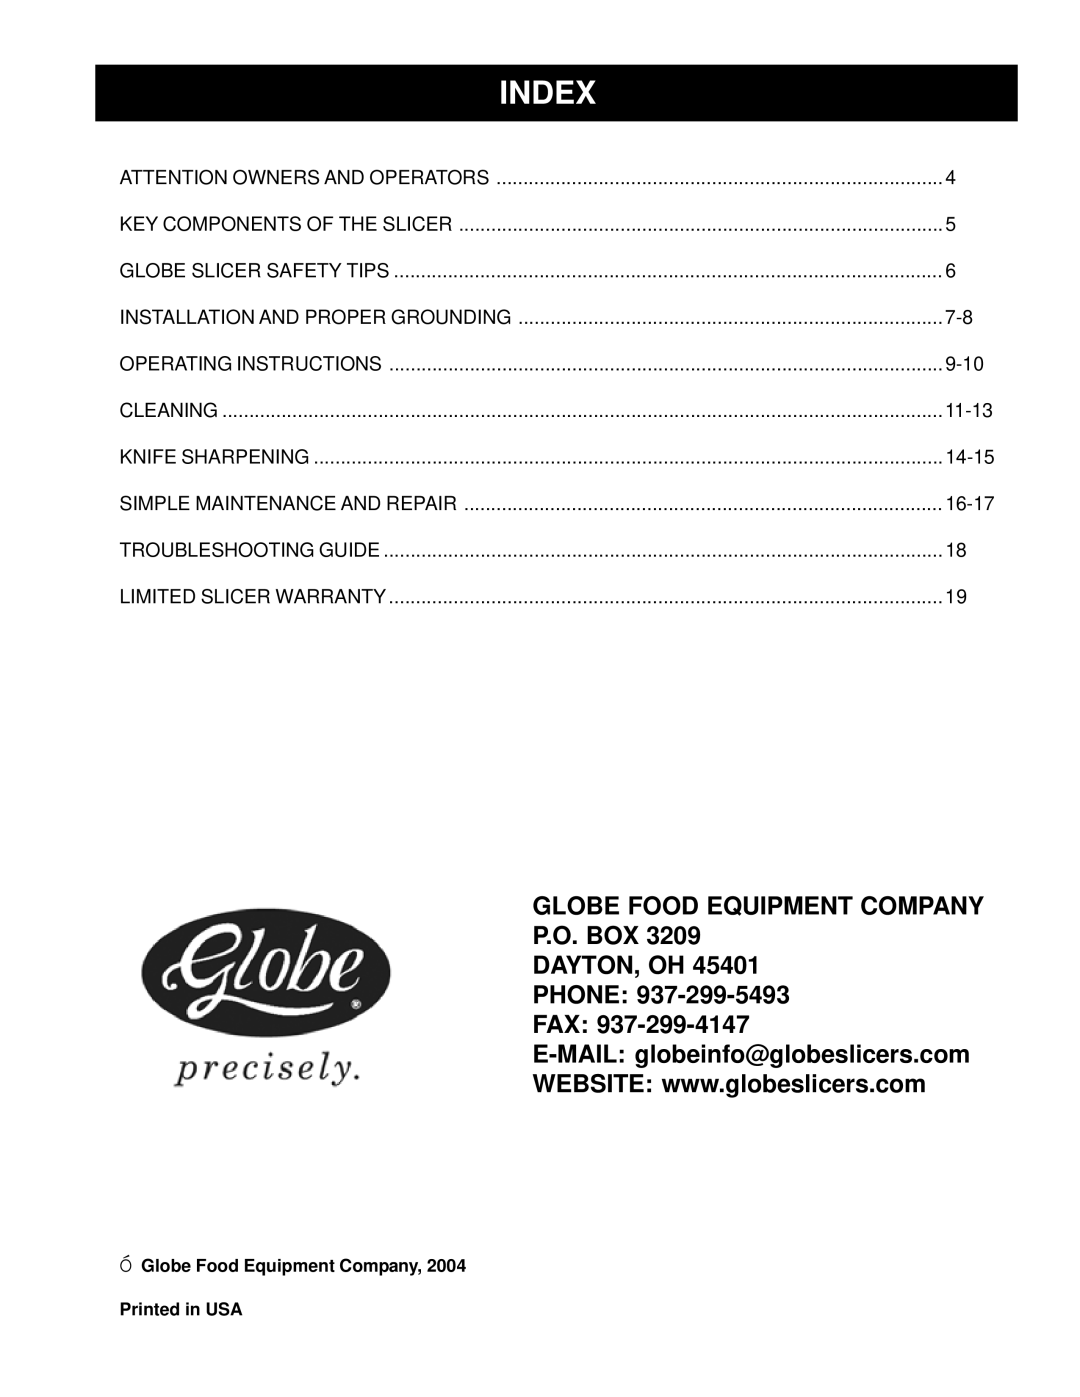 Globe GL12 instruction manual Index, Globe Food Equipment Company P.O. Box Dayton, Oh 